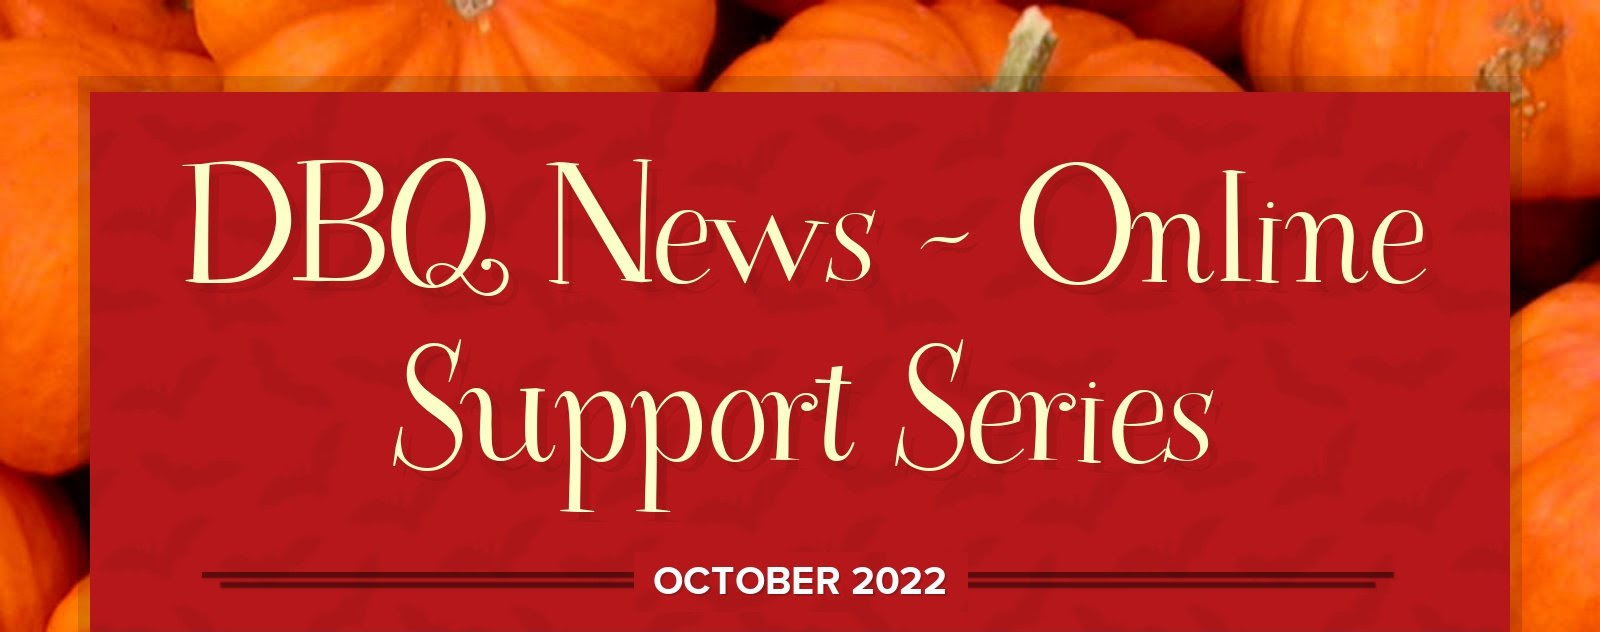 DBQ News - Online Support Series  OCTOBER 2022